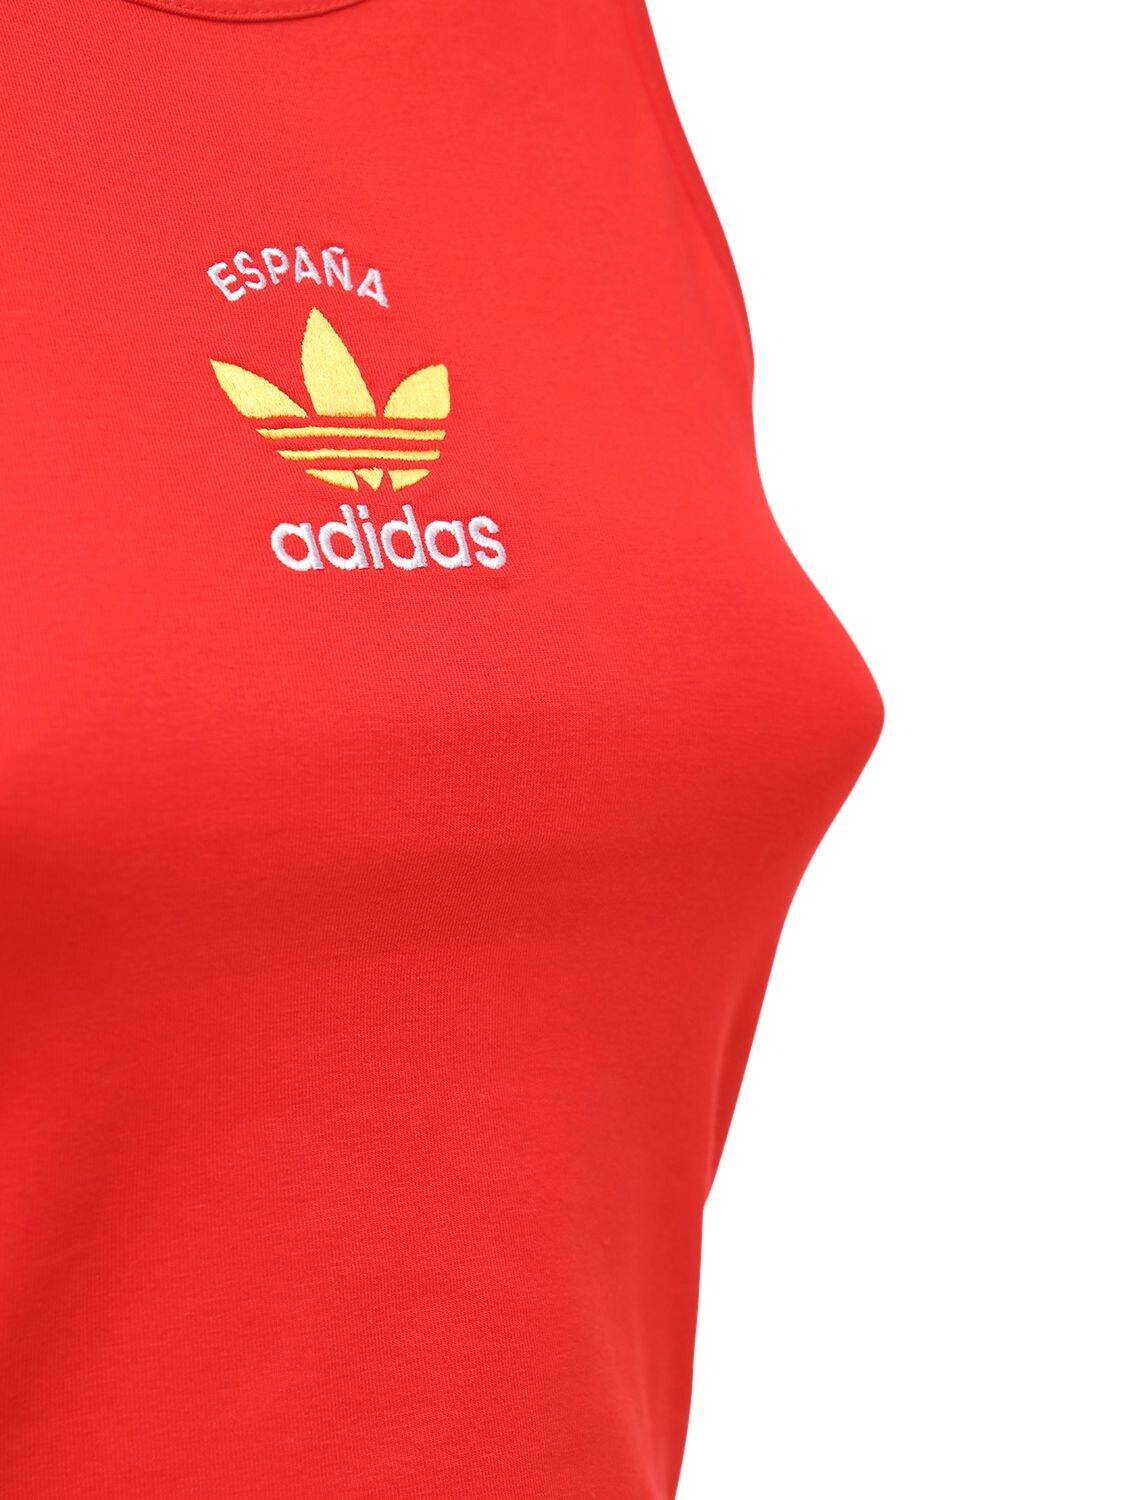 adidas Originals 3-s Spain Stretch Cotton Crop Tank Top in Red | Lyst